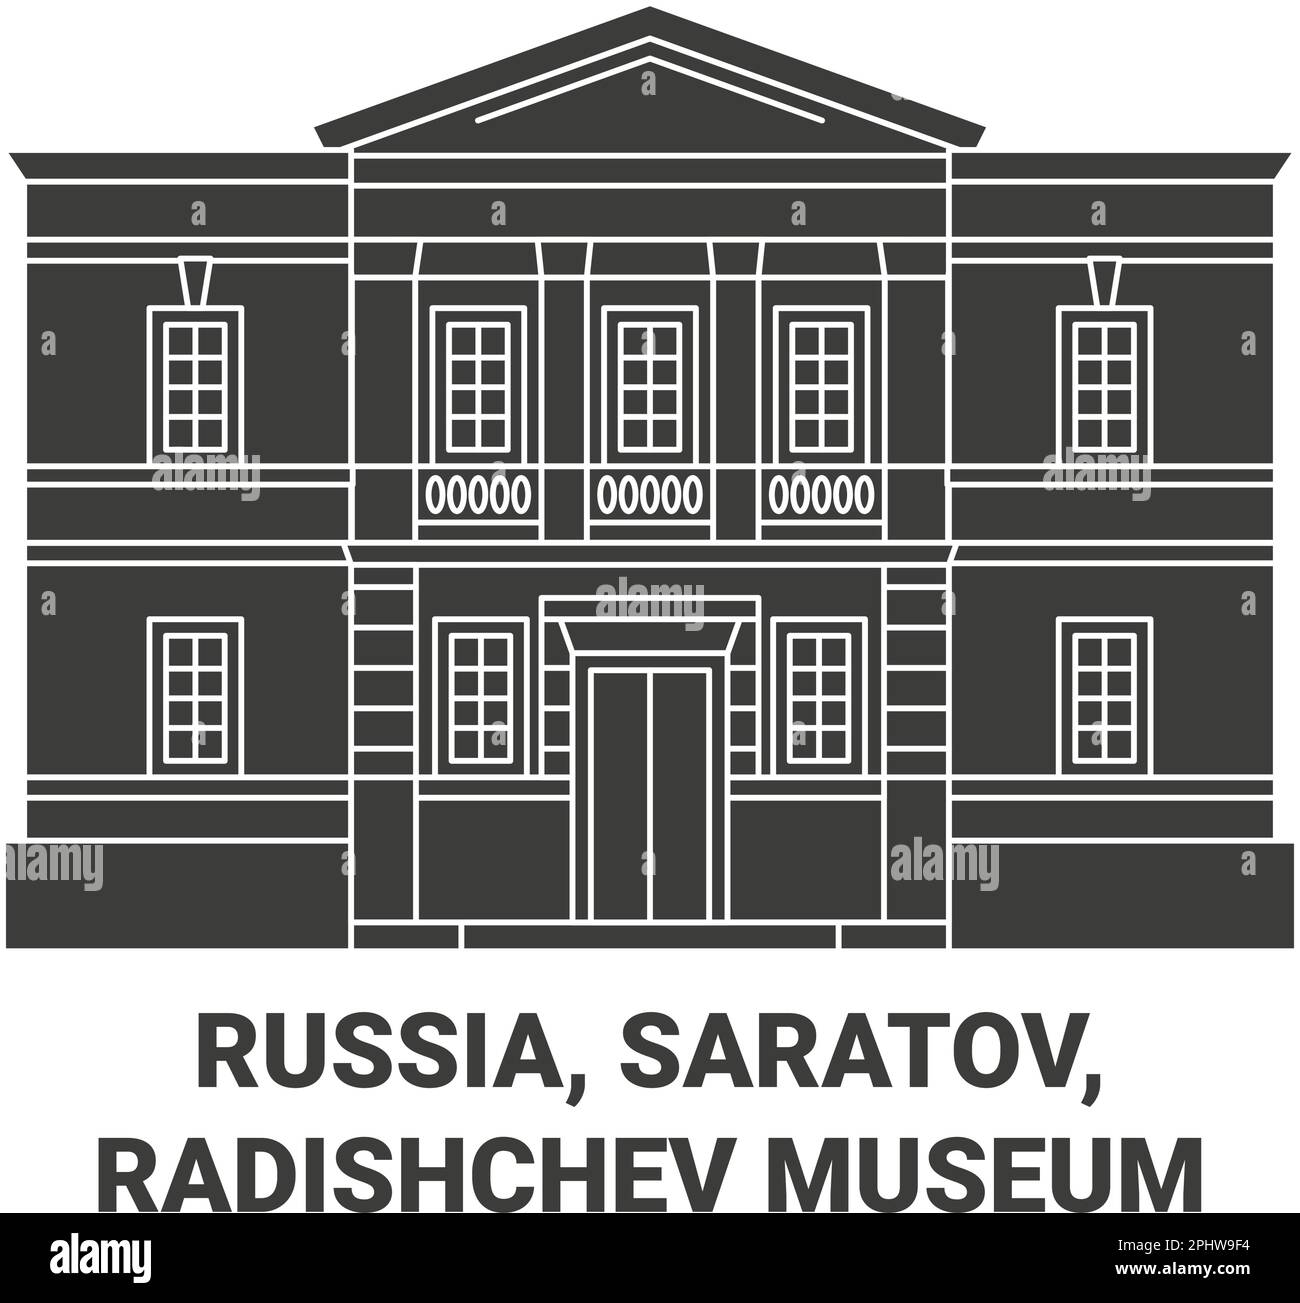 Russia, Saratov, Radishchev Museum travel landmark vector illustration Stock Vector